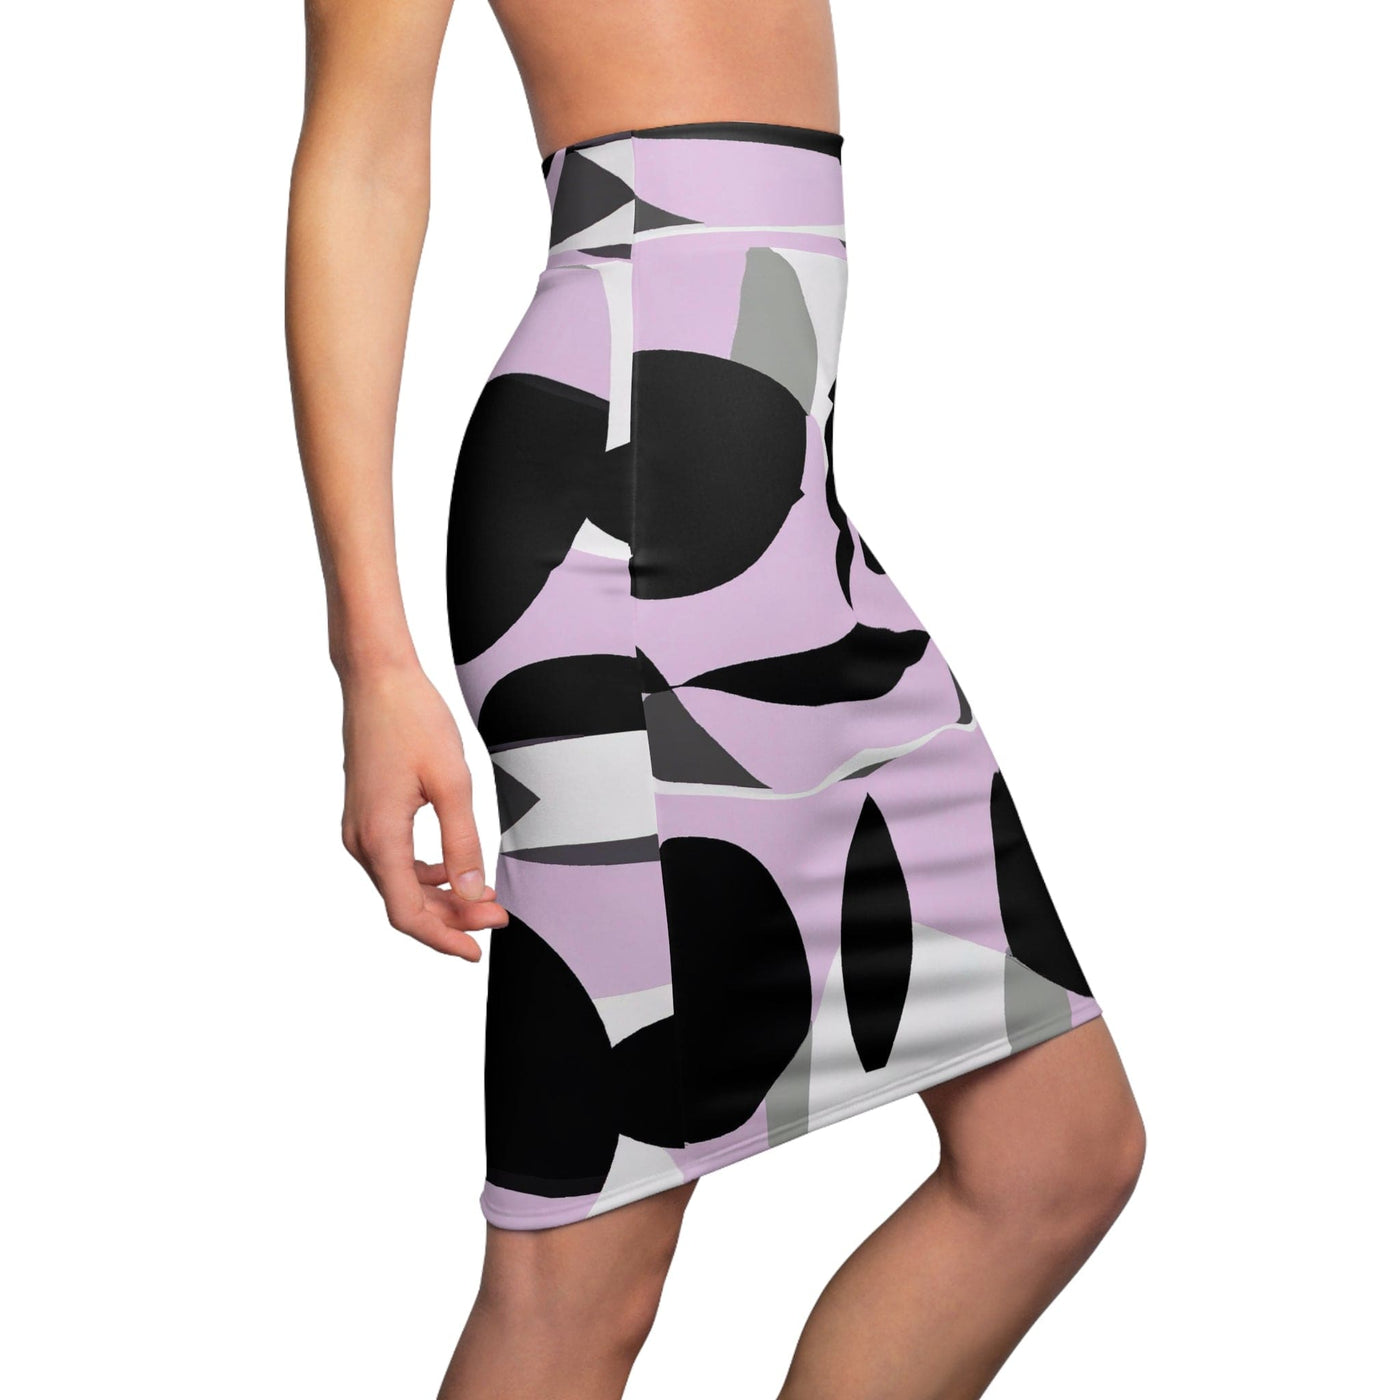 High Waist Womens Pencil Skirt - Contour Stretch - Geometric Lavender And Black